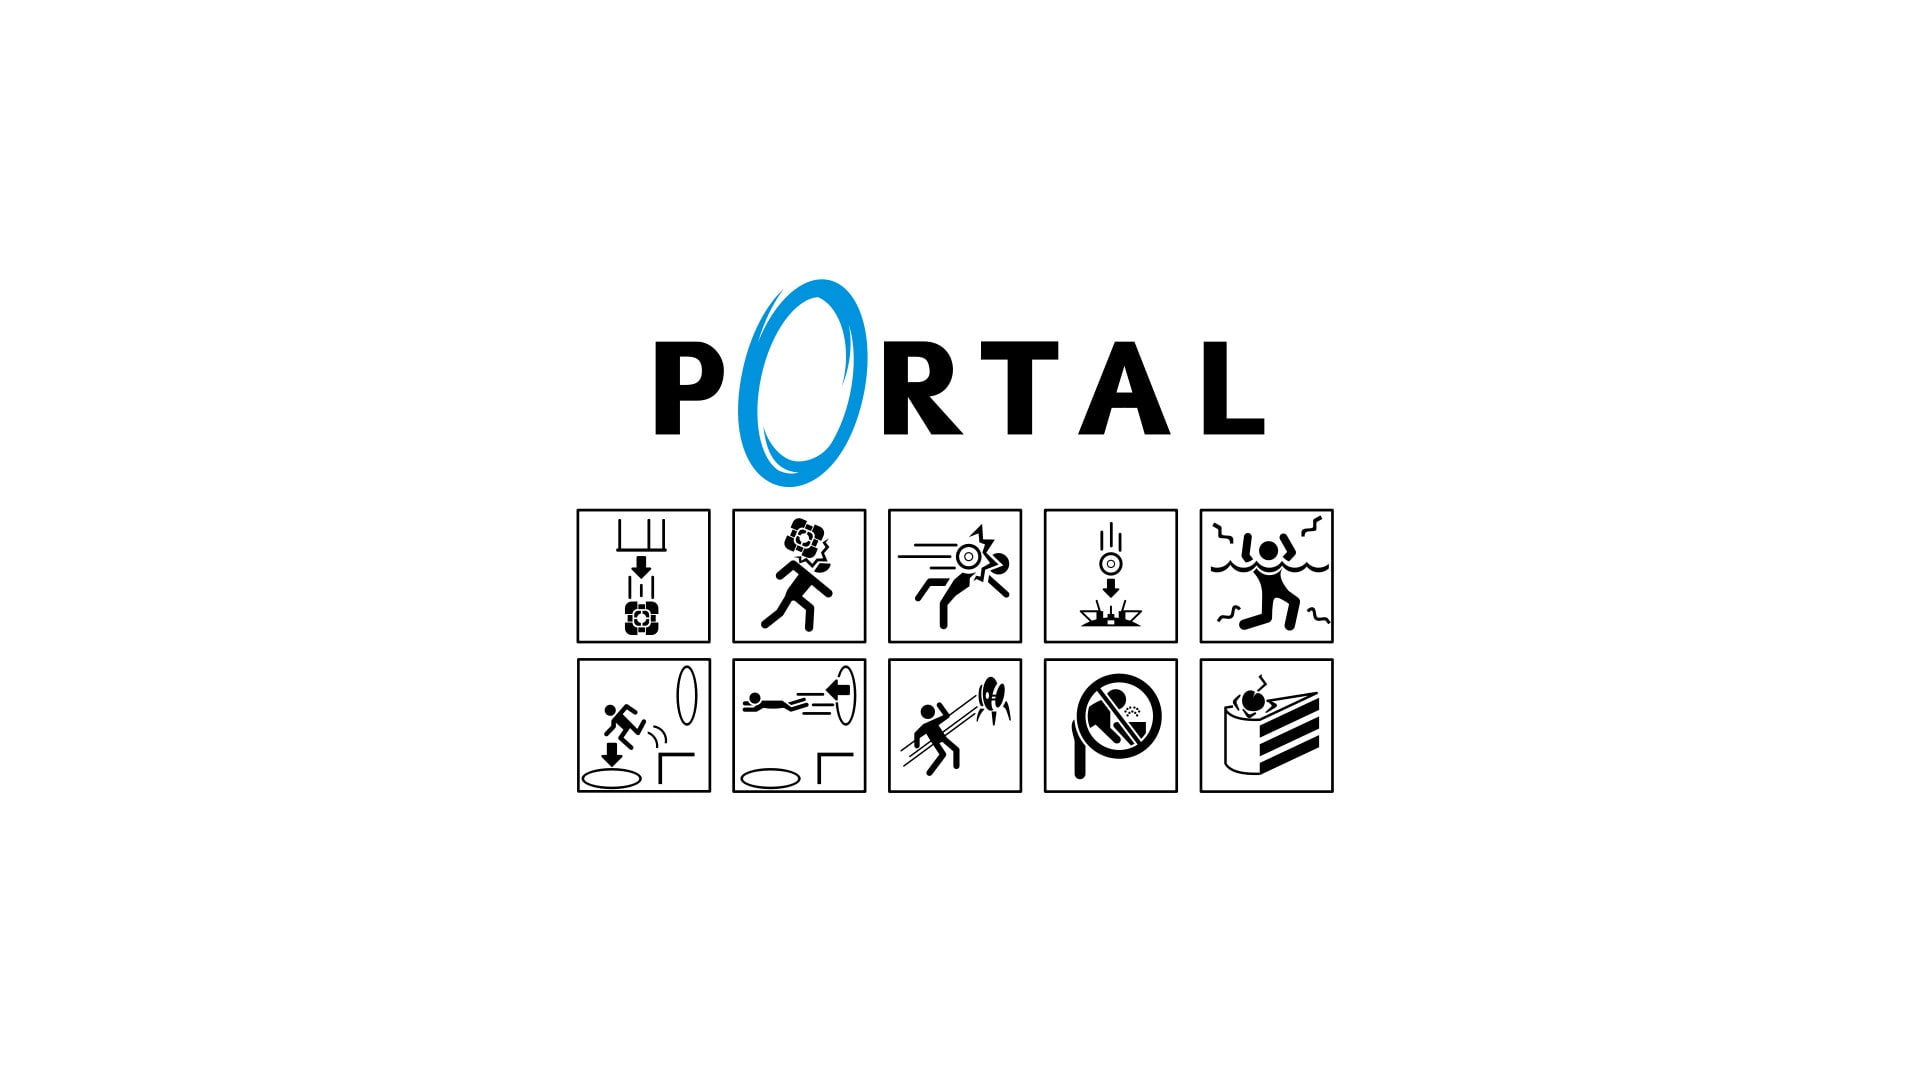 Portal (game), video games, communication, studio shot, text